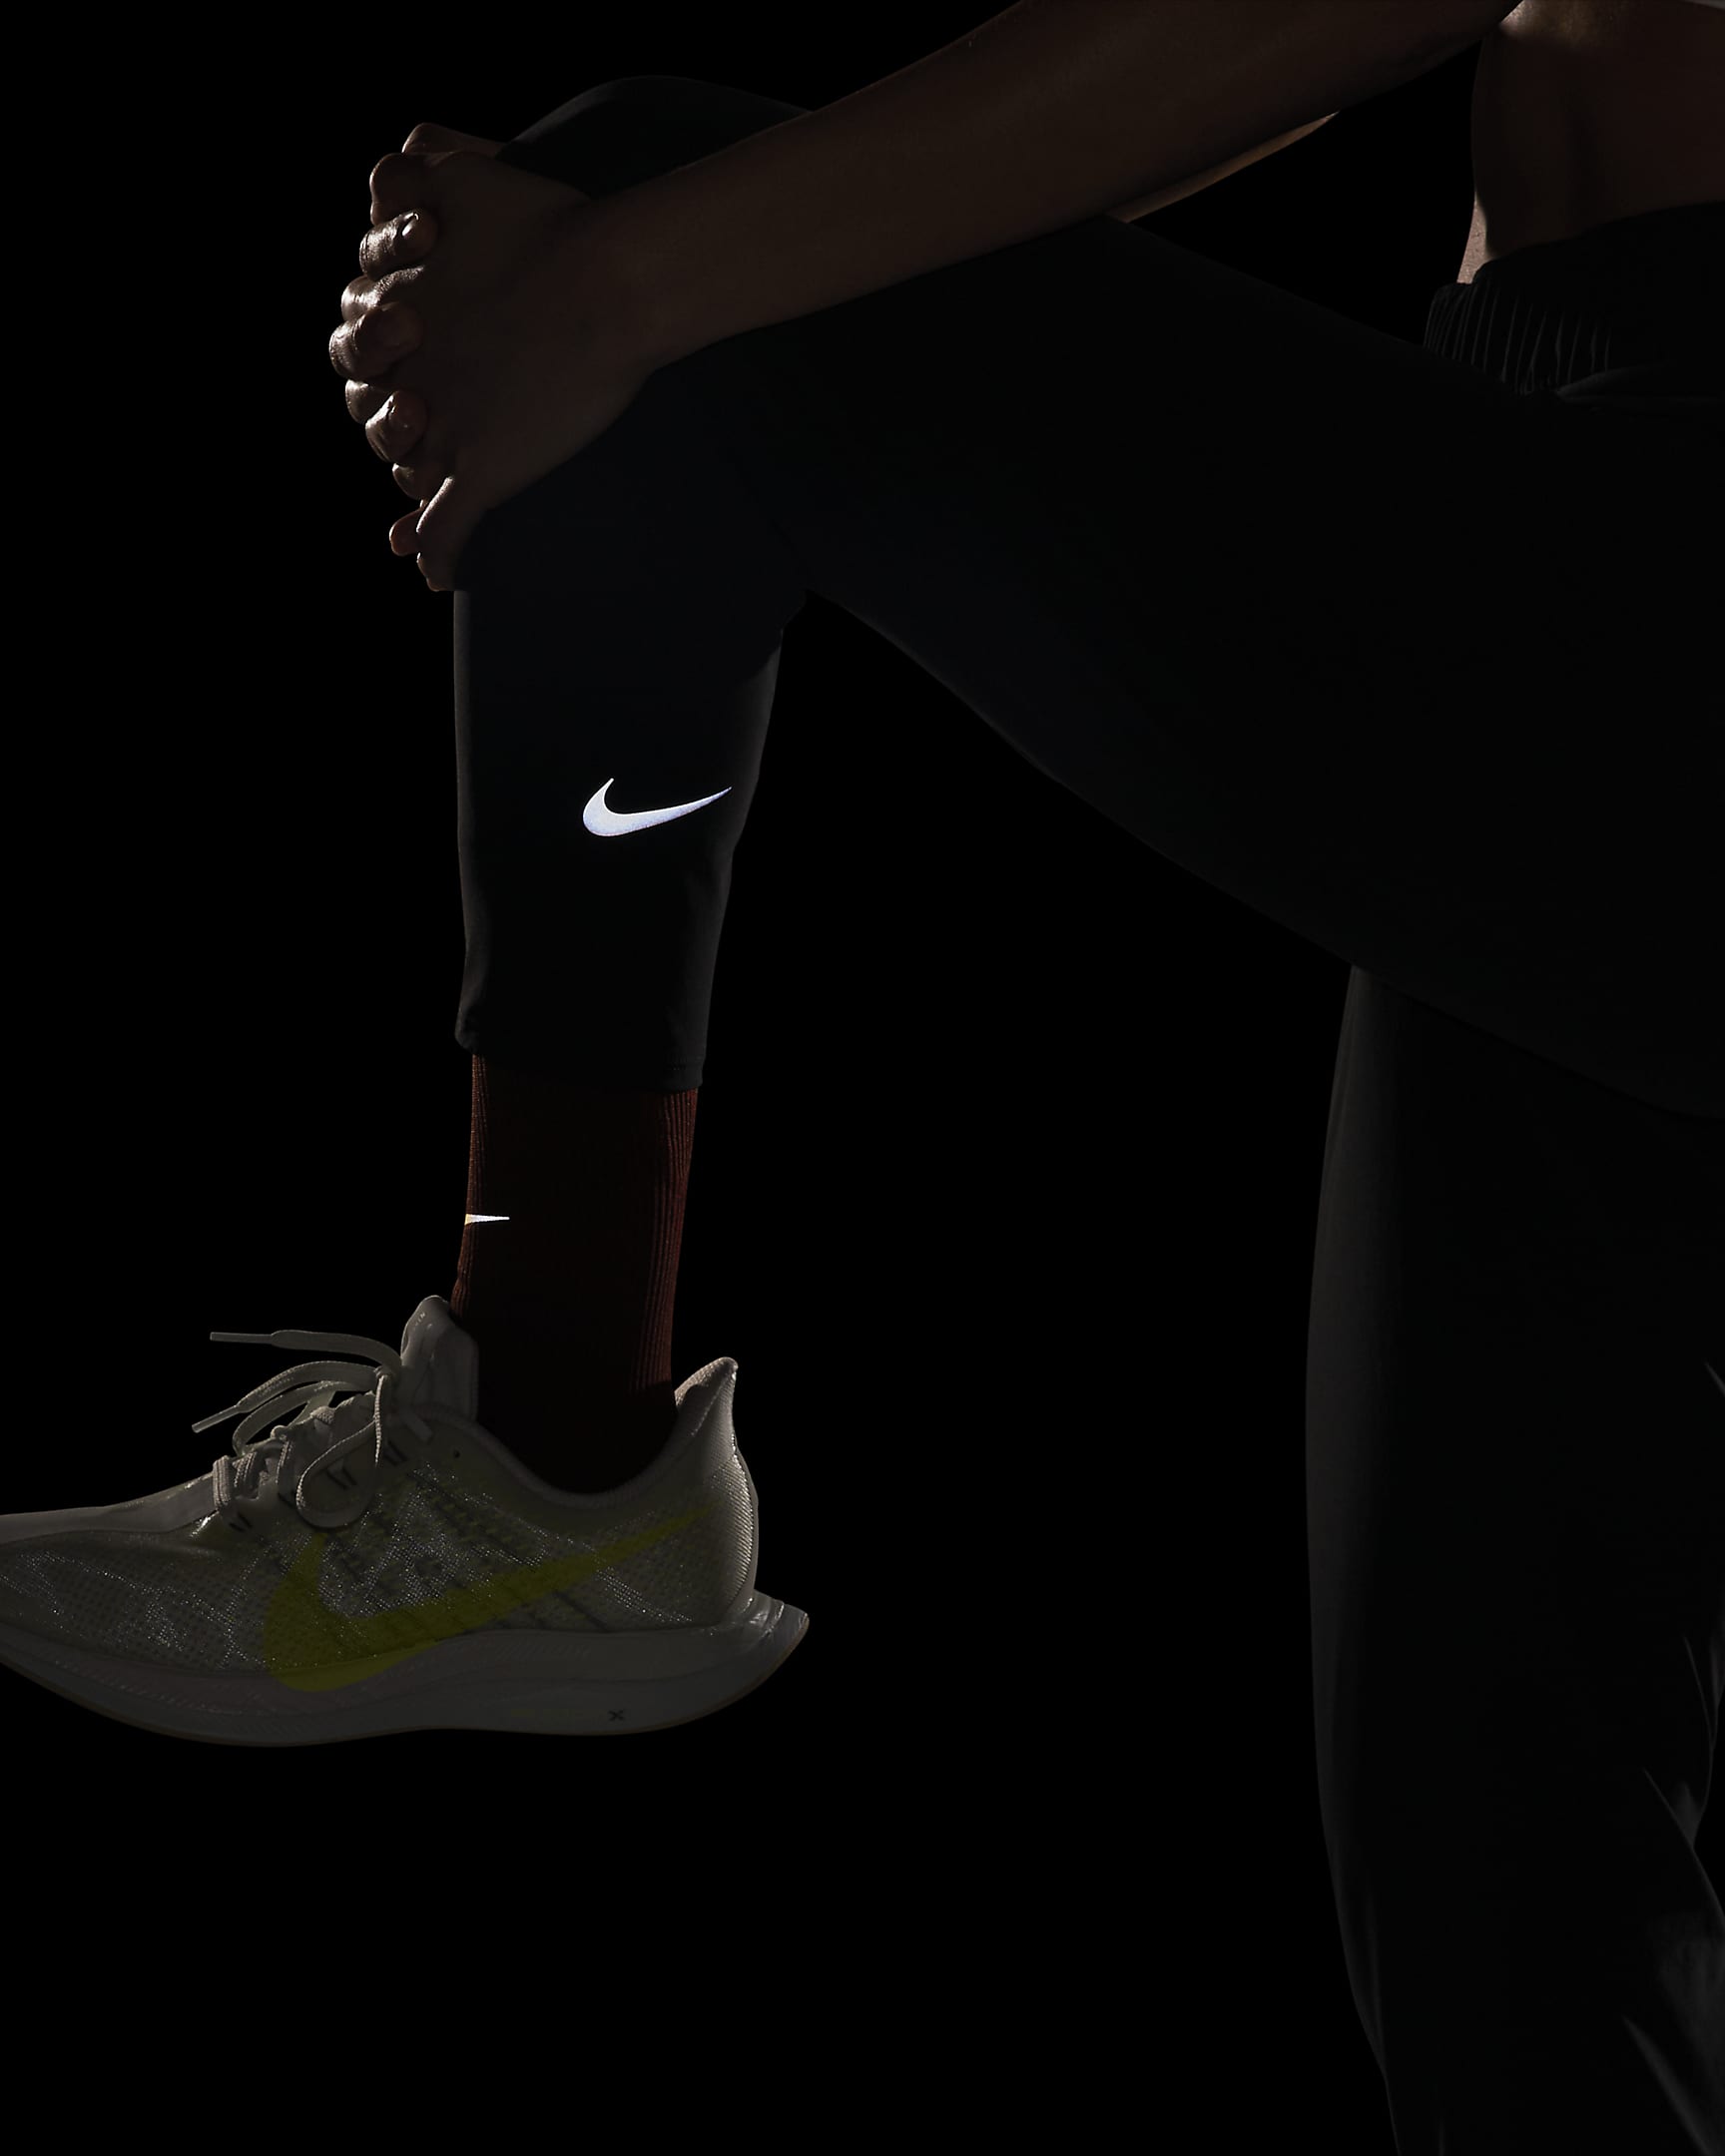 Nike Essential Women's 7/8 Running Trousers. Nike PT